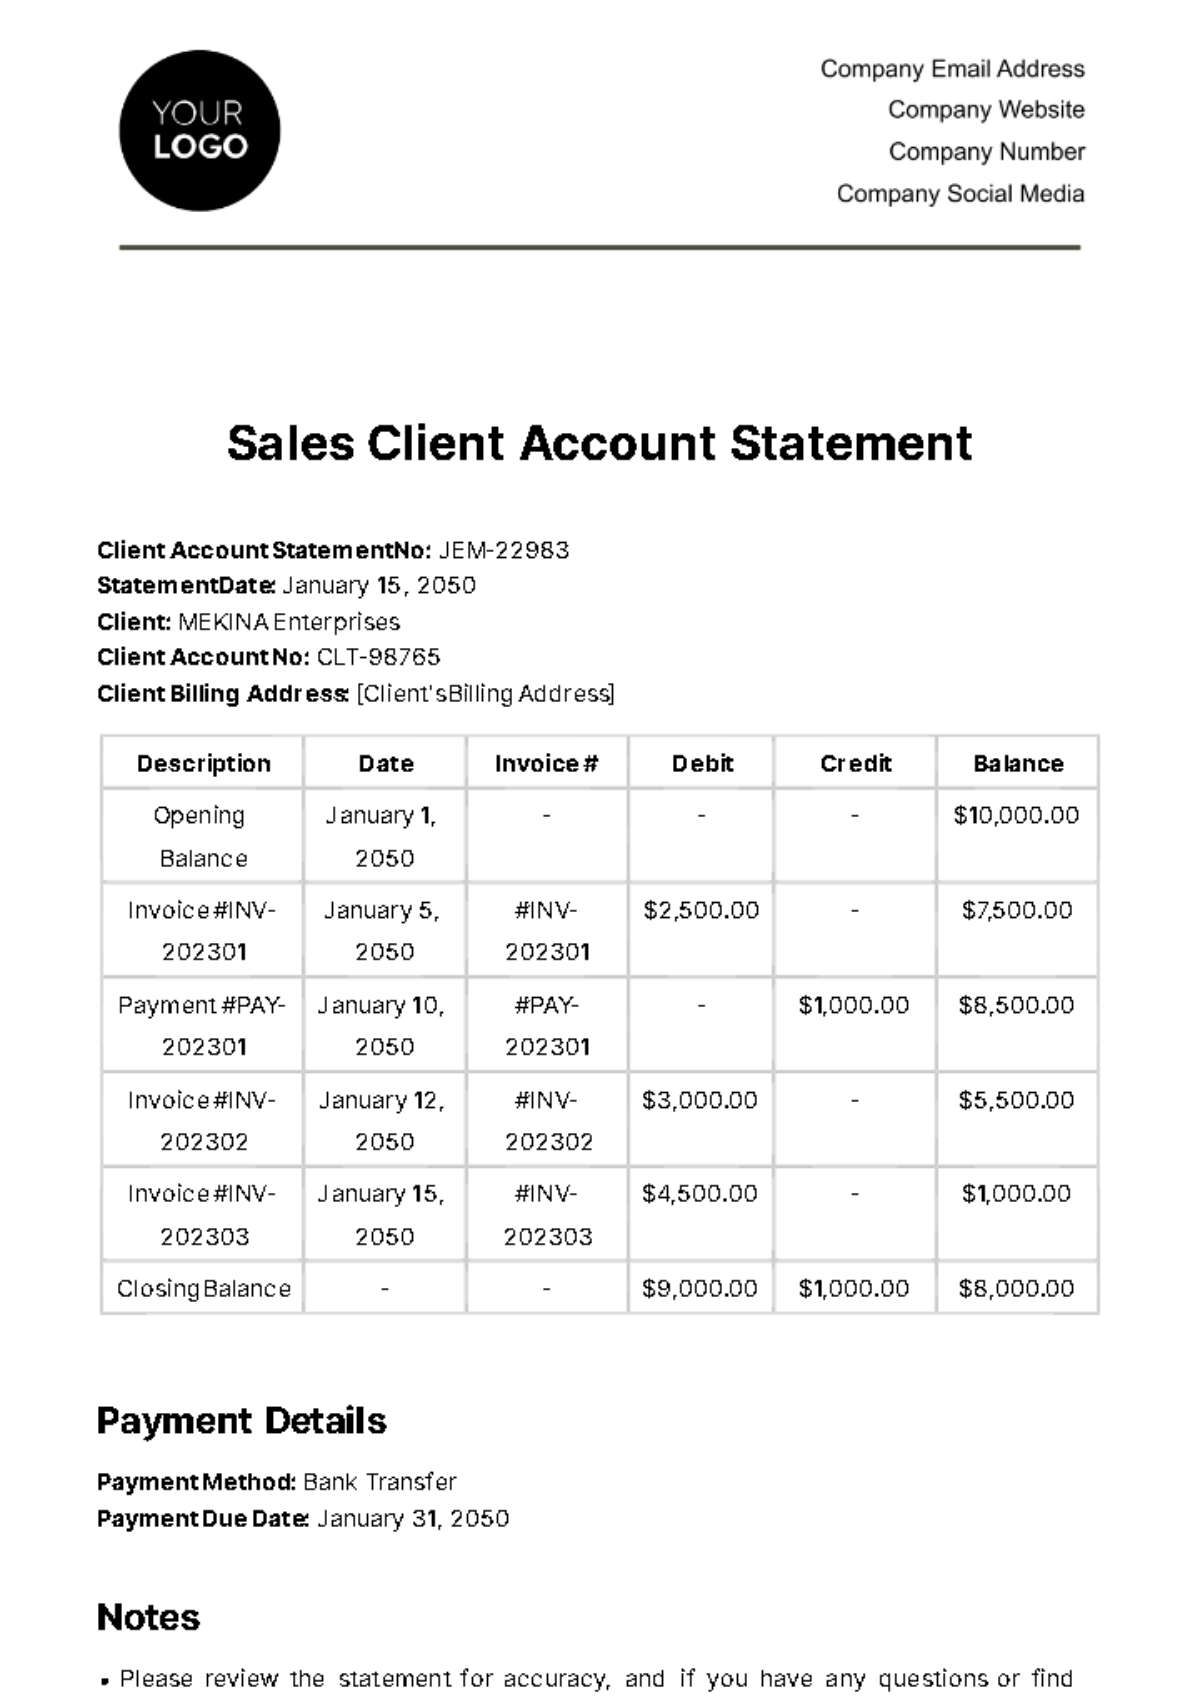 Sales Client Account Statement Template